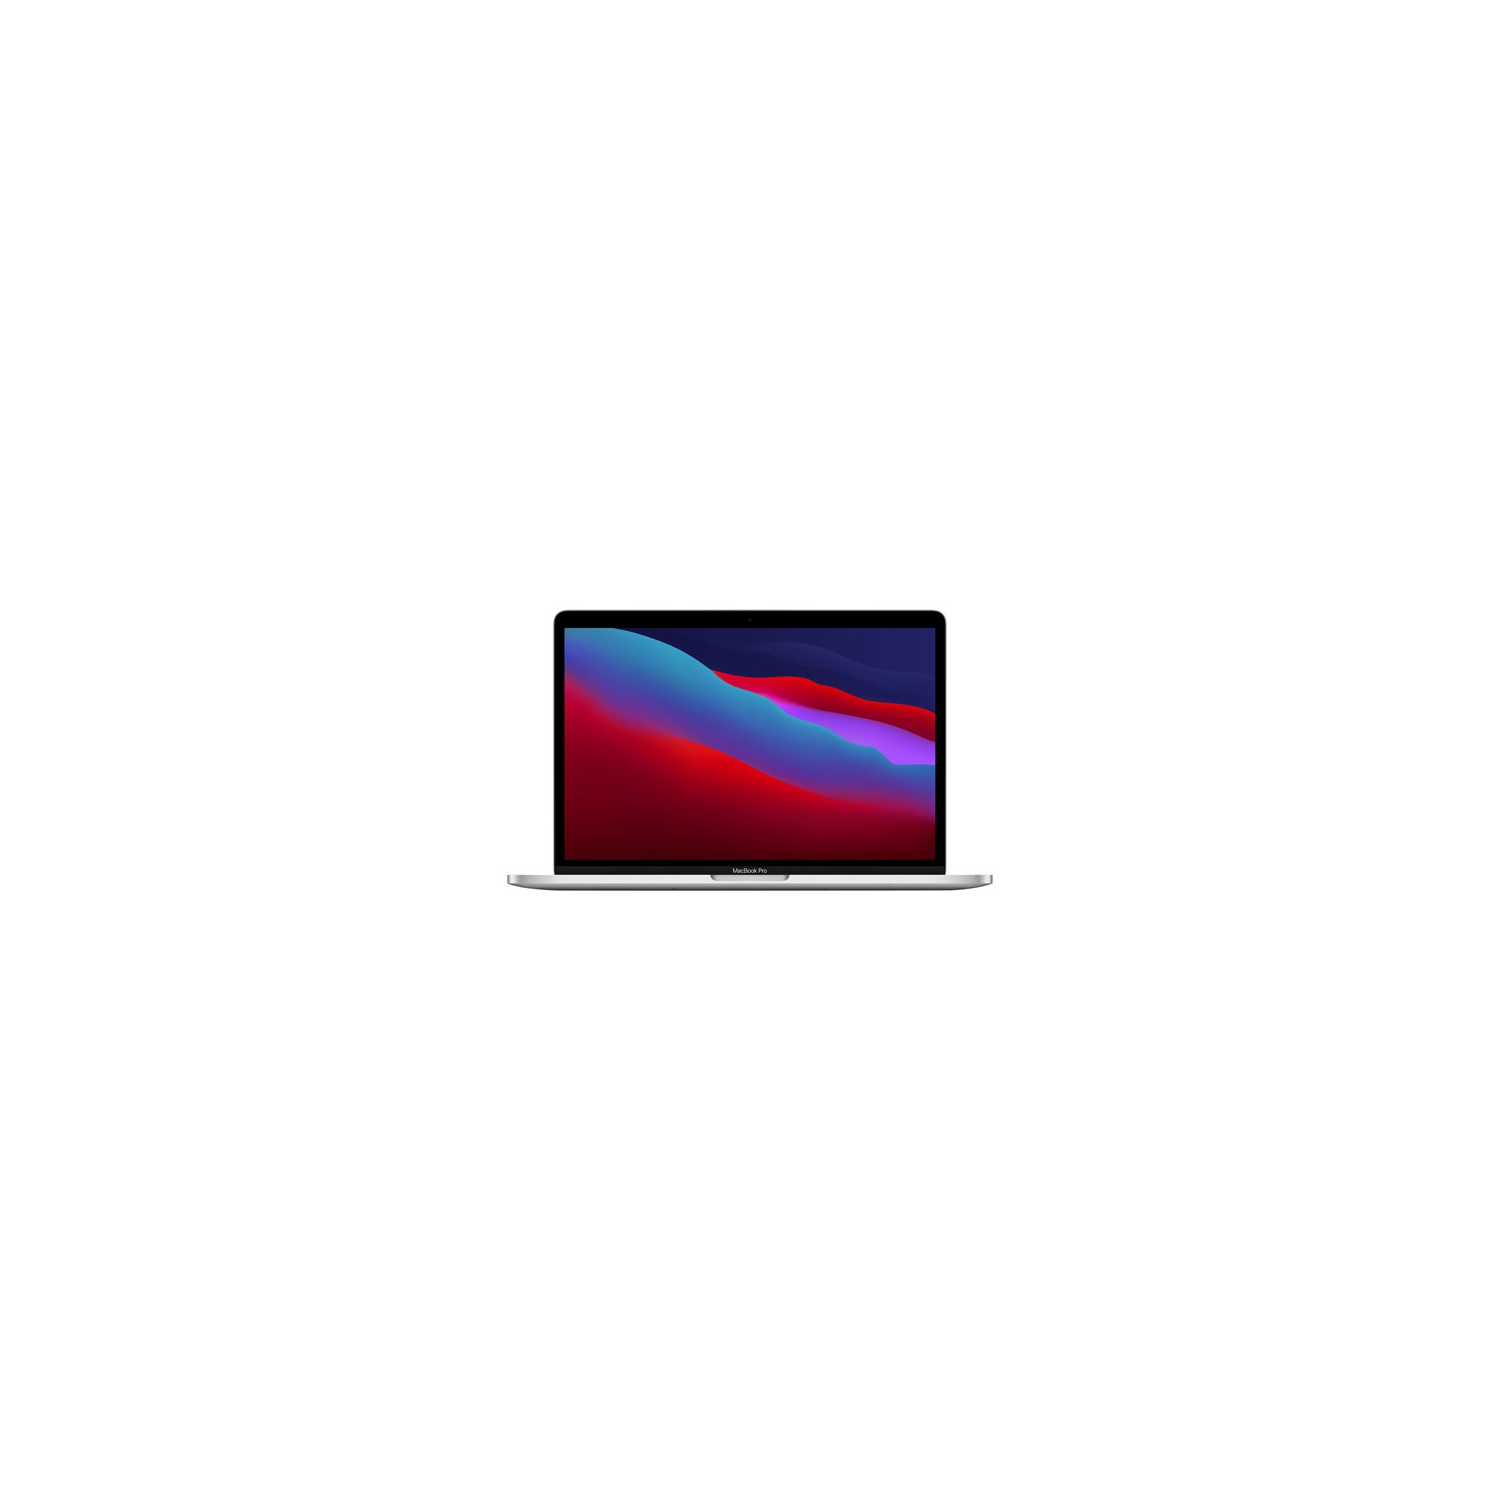 Refurbished (Good) - Apple MacBook Pro 13.3" w/ Touch Bar (Fall 2020) - Silver (Apple M1 Chip / 256GB SSD / 8GB RAM) - En